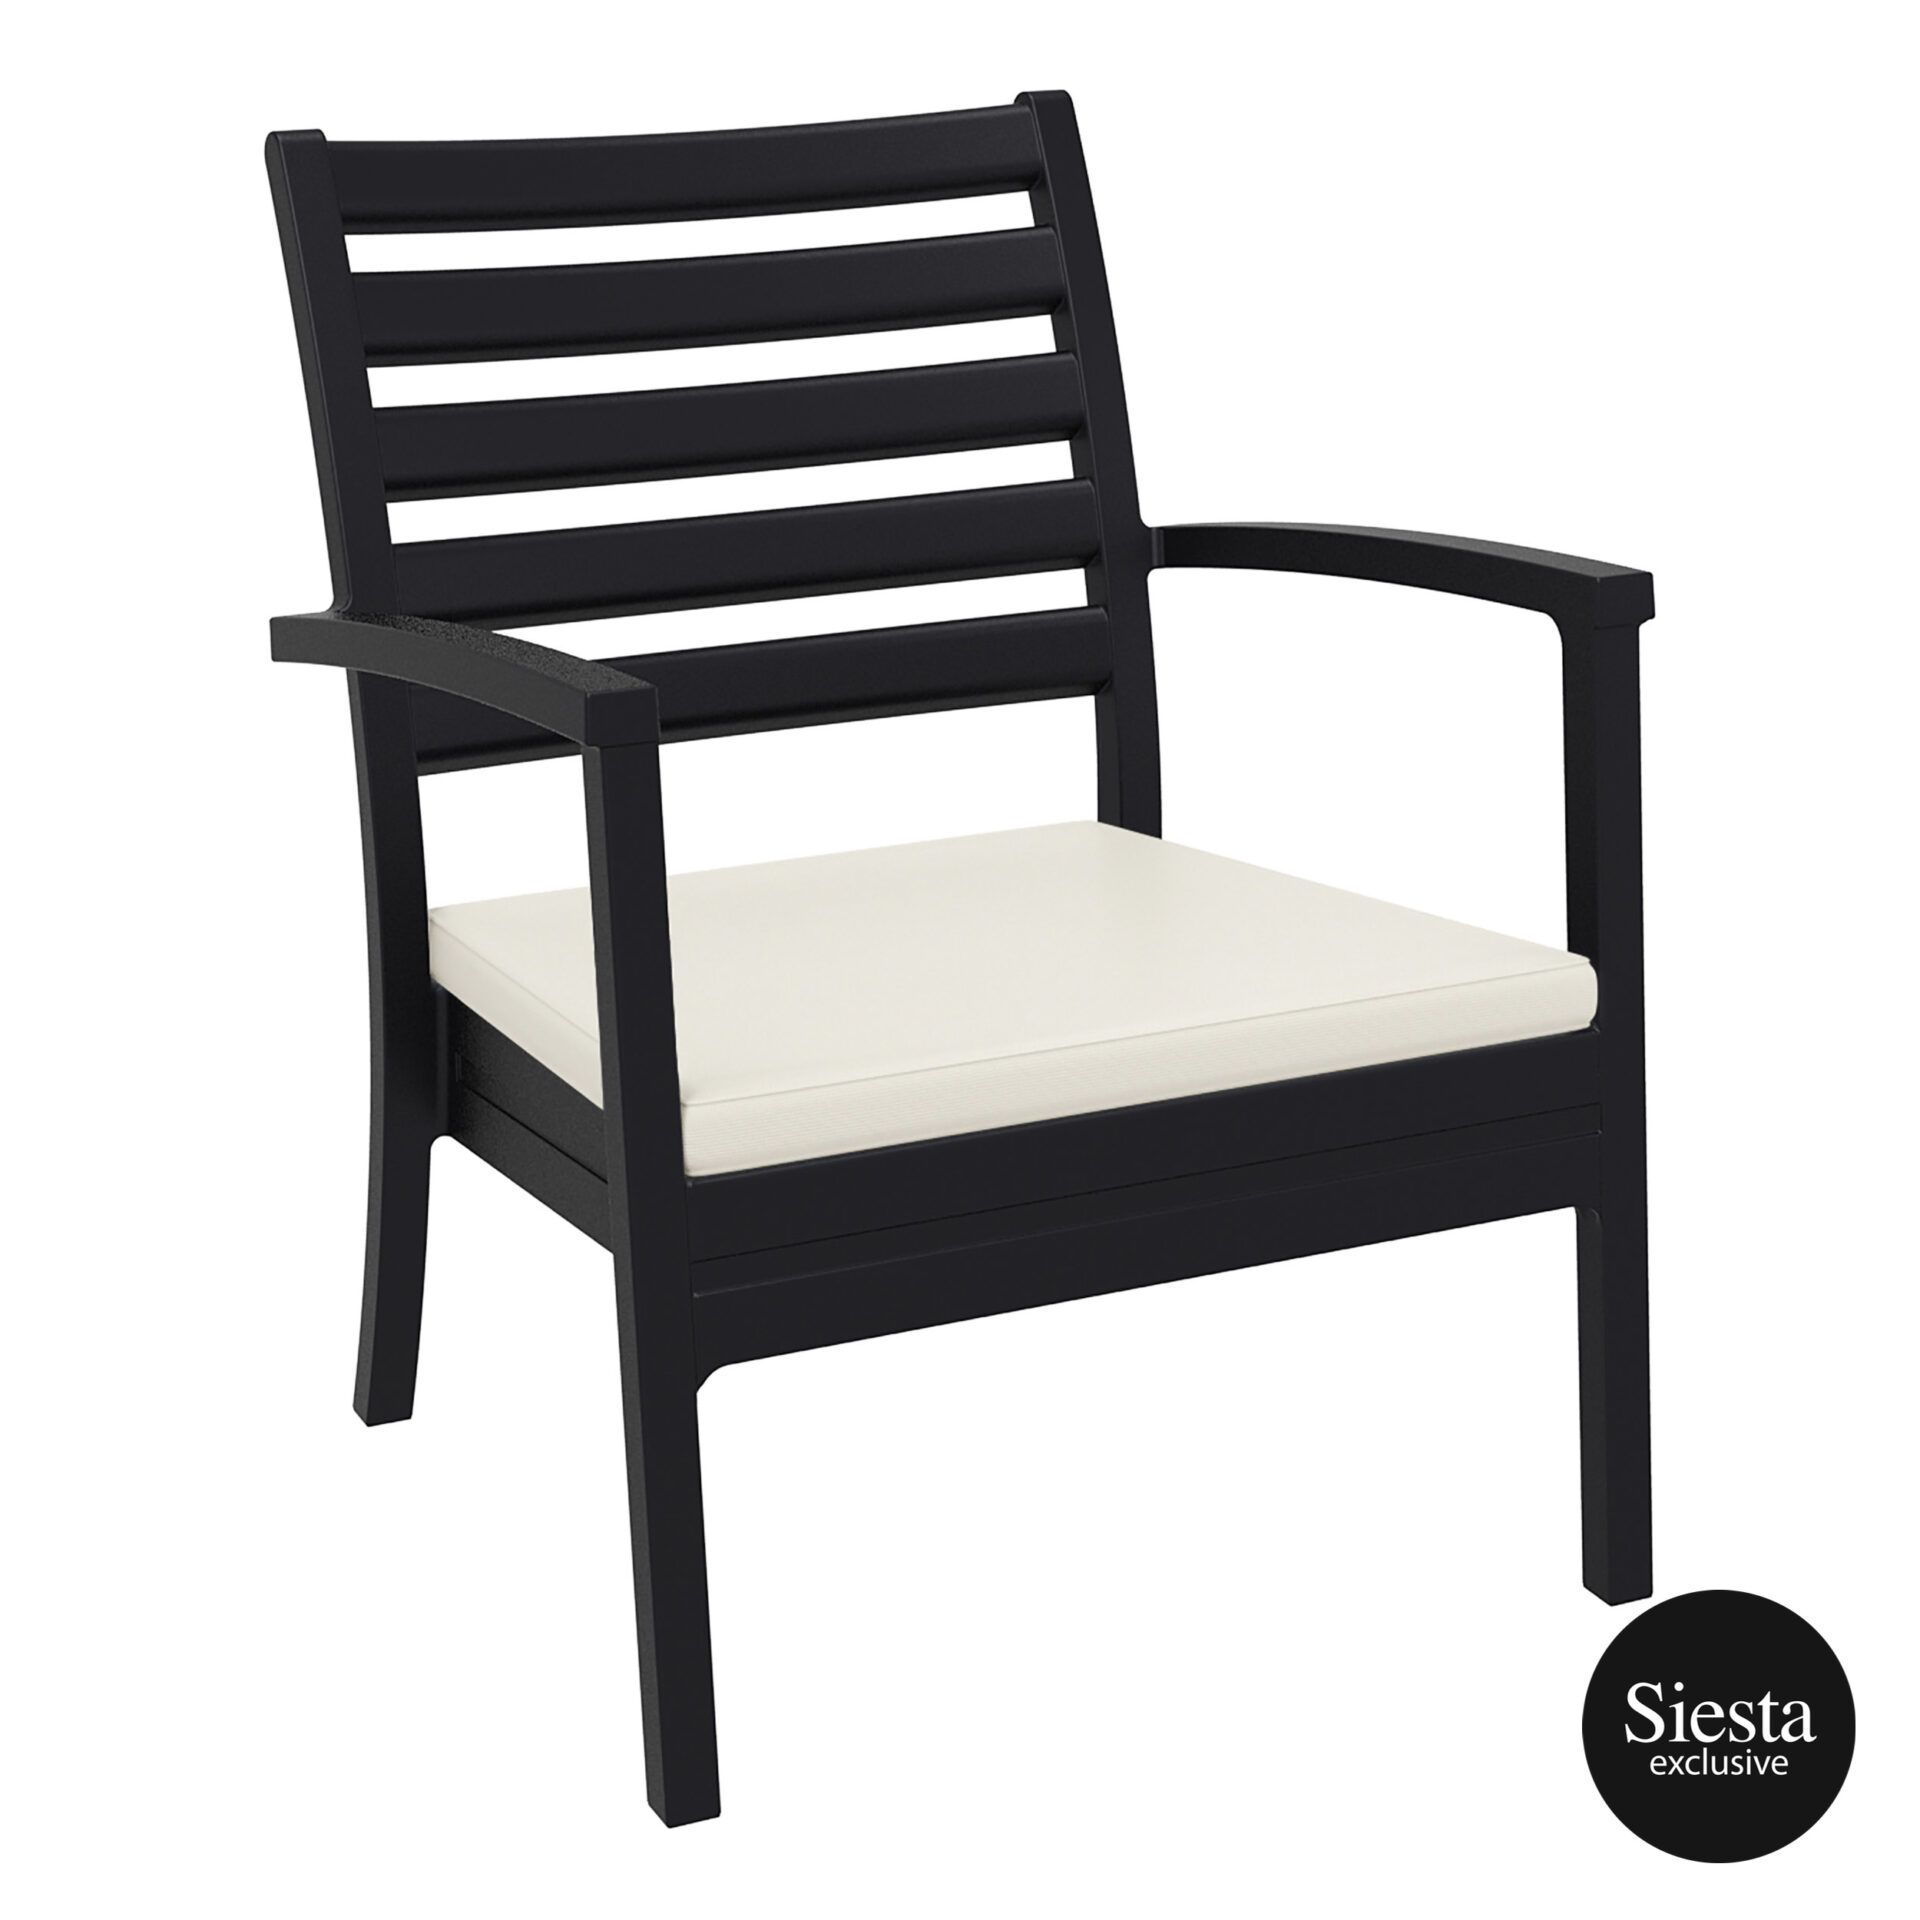 Artemis Xl Seat Cushion beige black front side